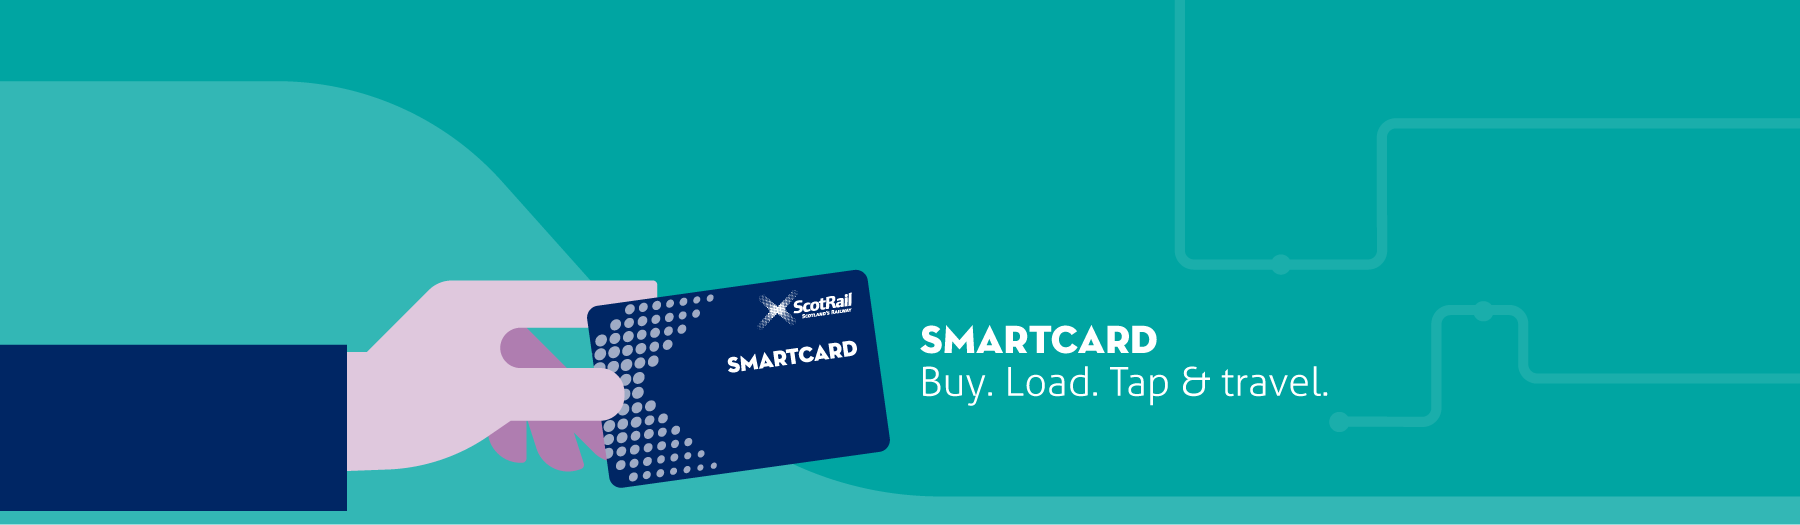 Smartcard - Buy. Load. Tap & travel